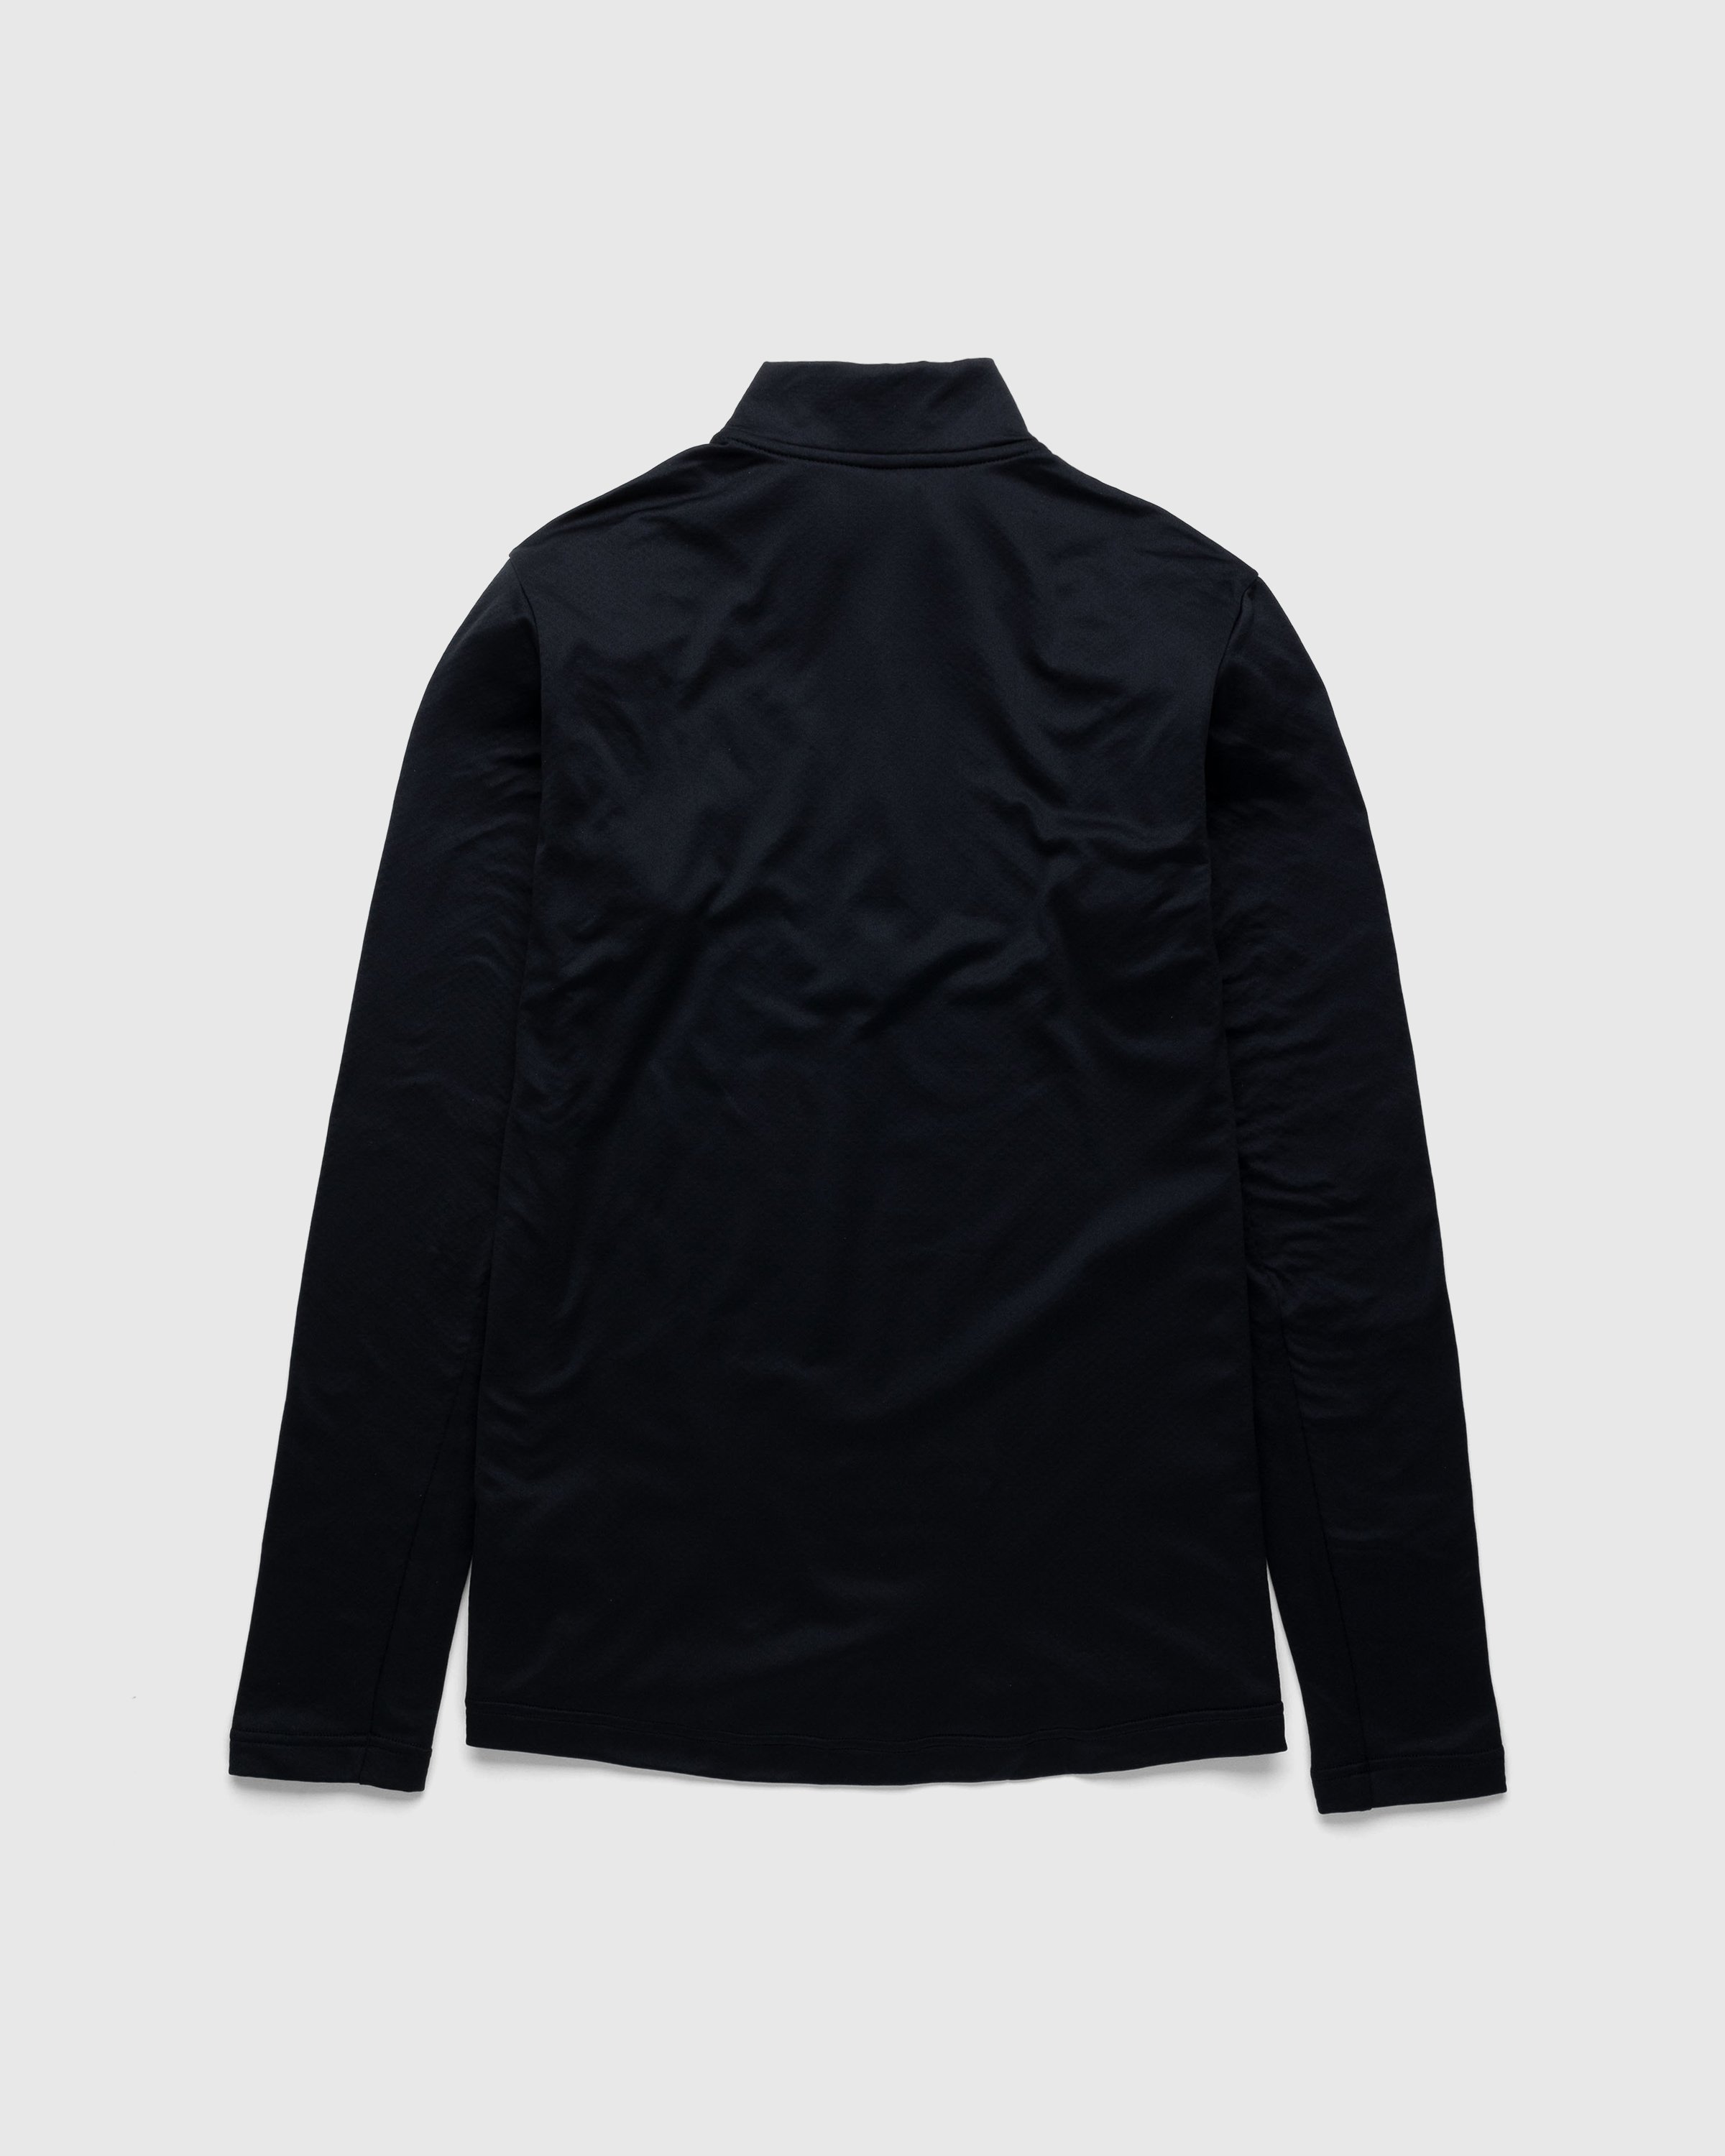 Adidas - Multi Half-Zip Longsleeve Black - Clothing - Black - Image 2